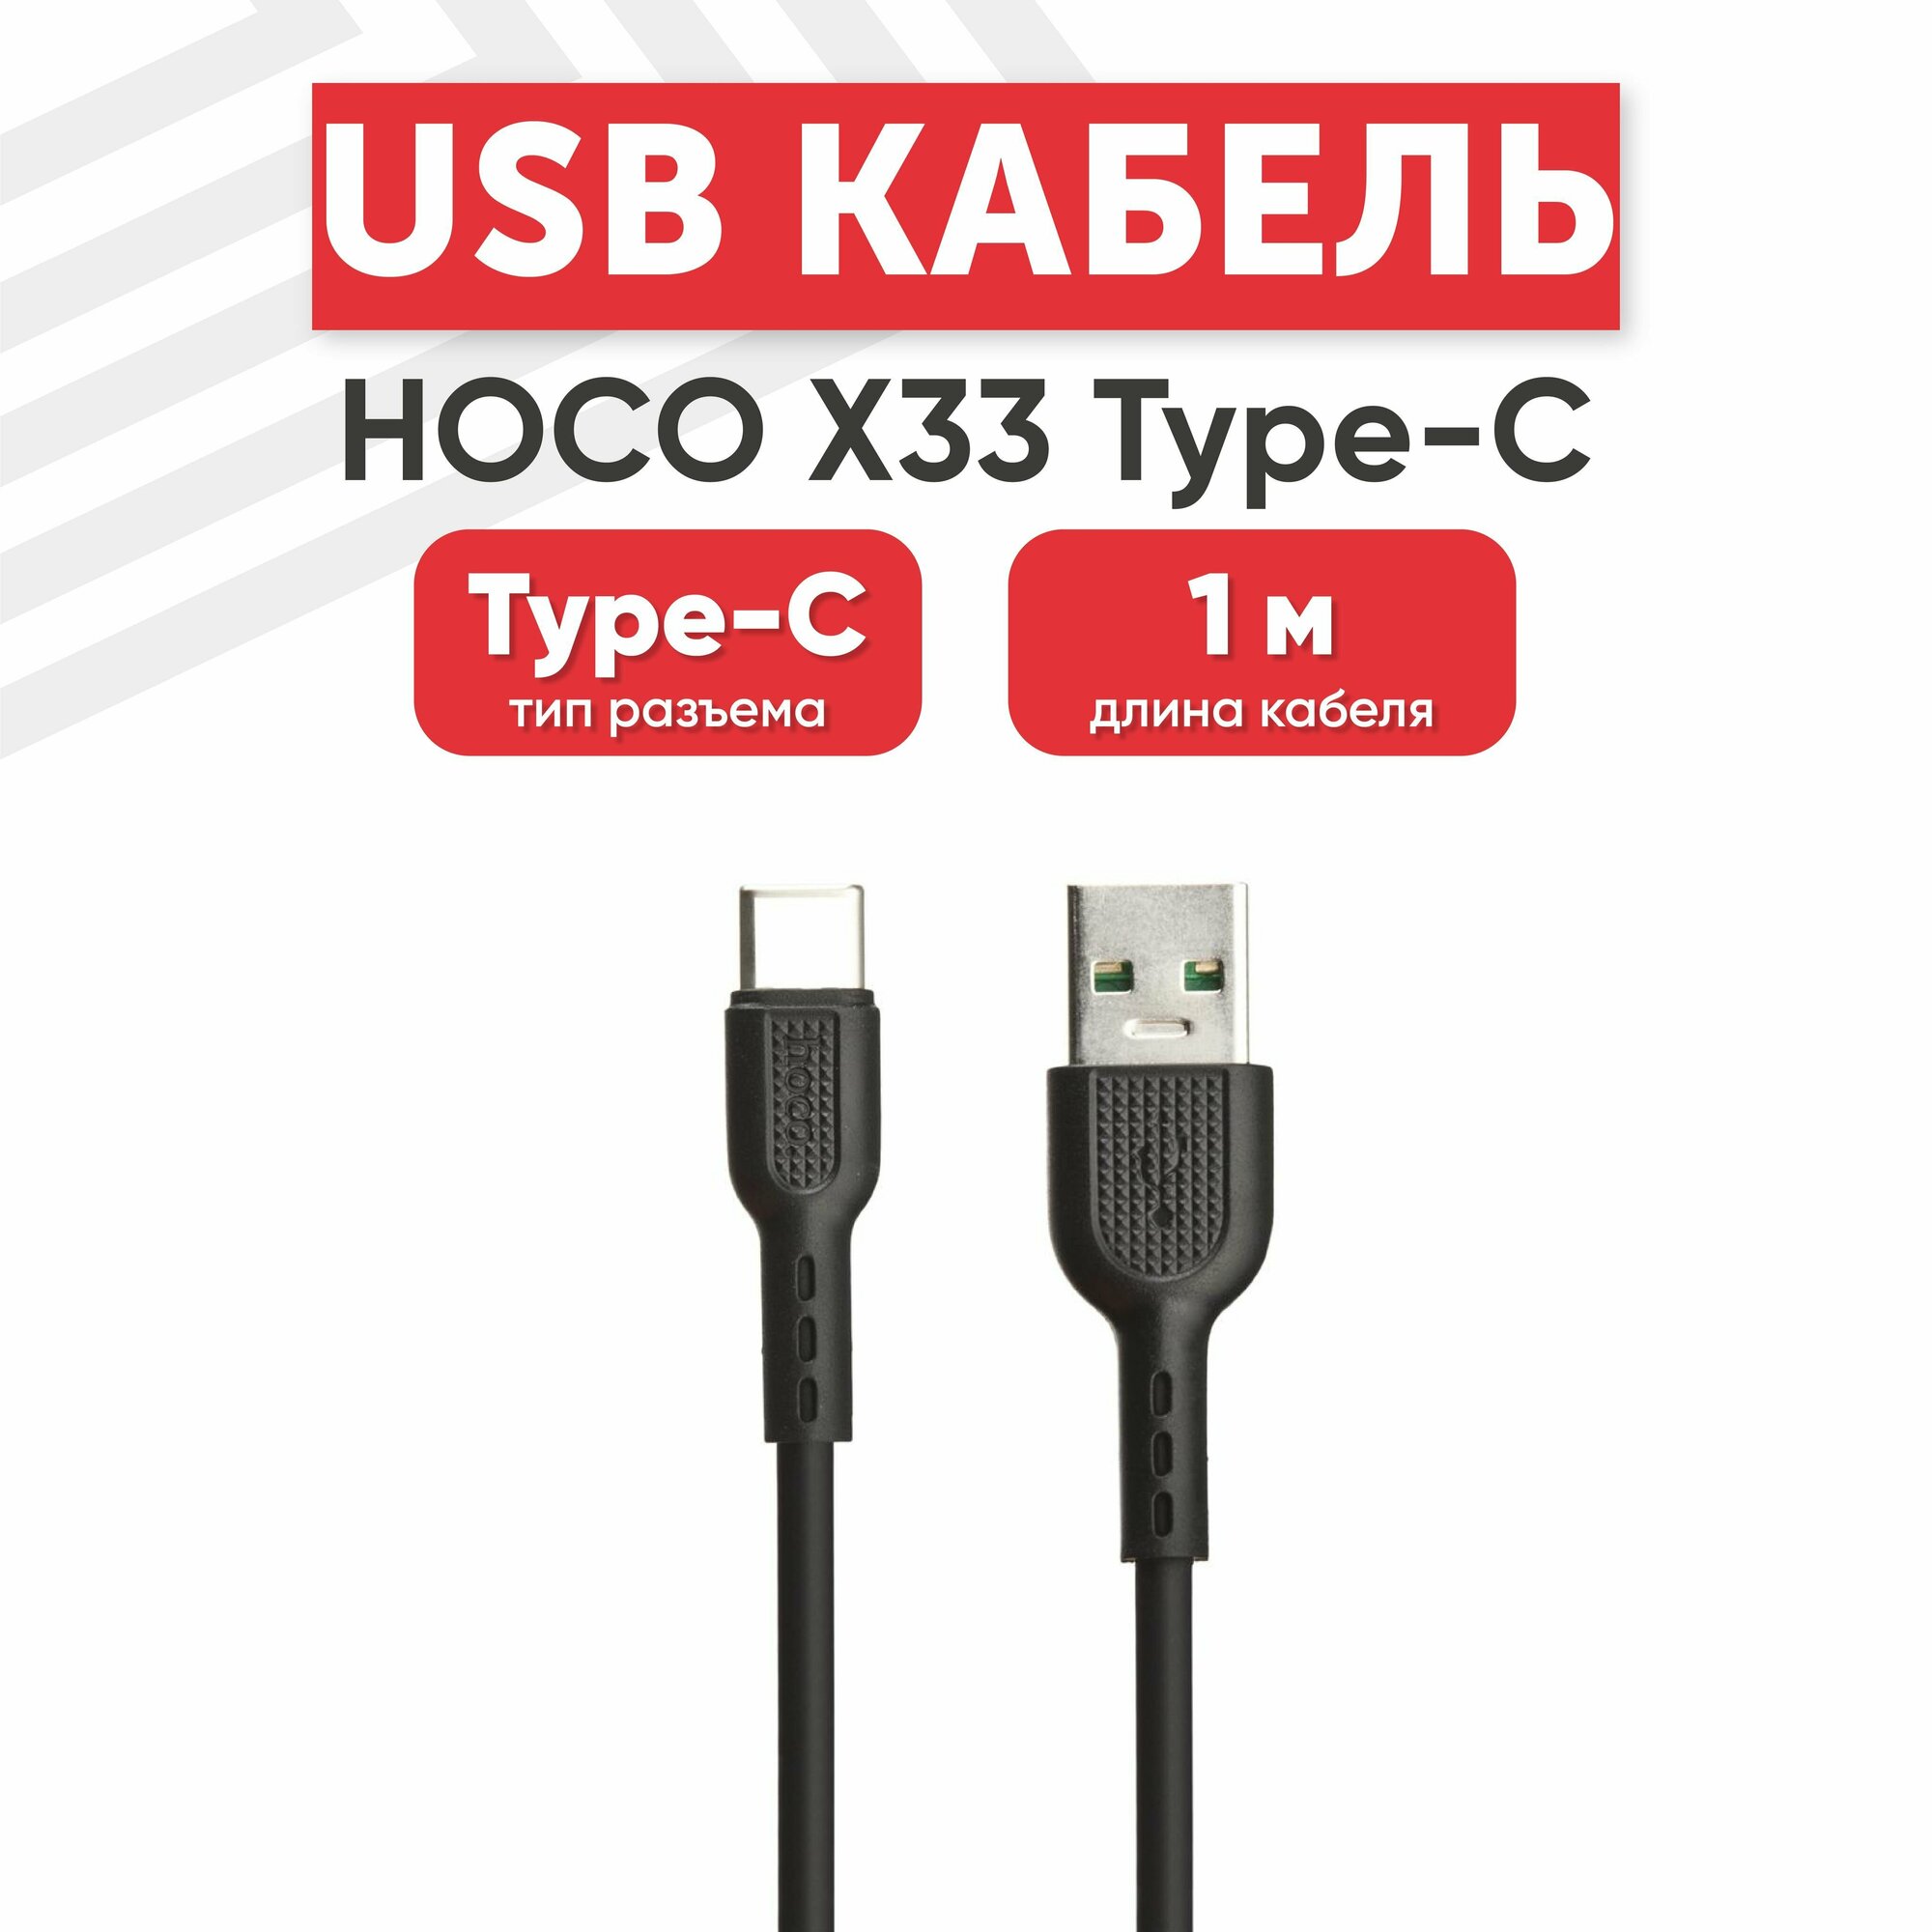 USB кабель Hoco X33 для зарядки, передачи данных, Type-C, 5А, 1 метр, PVC, черный